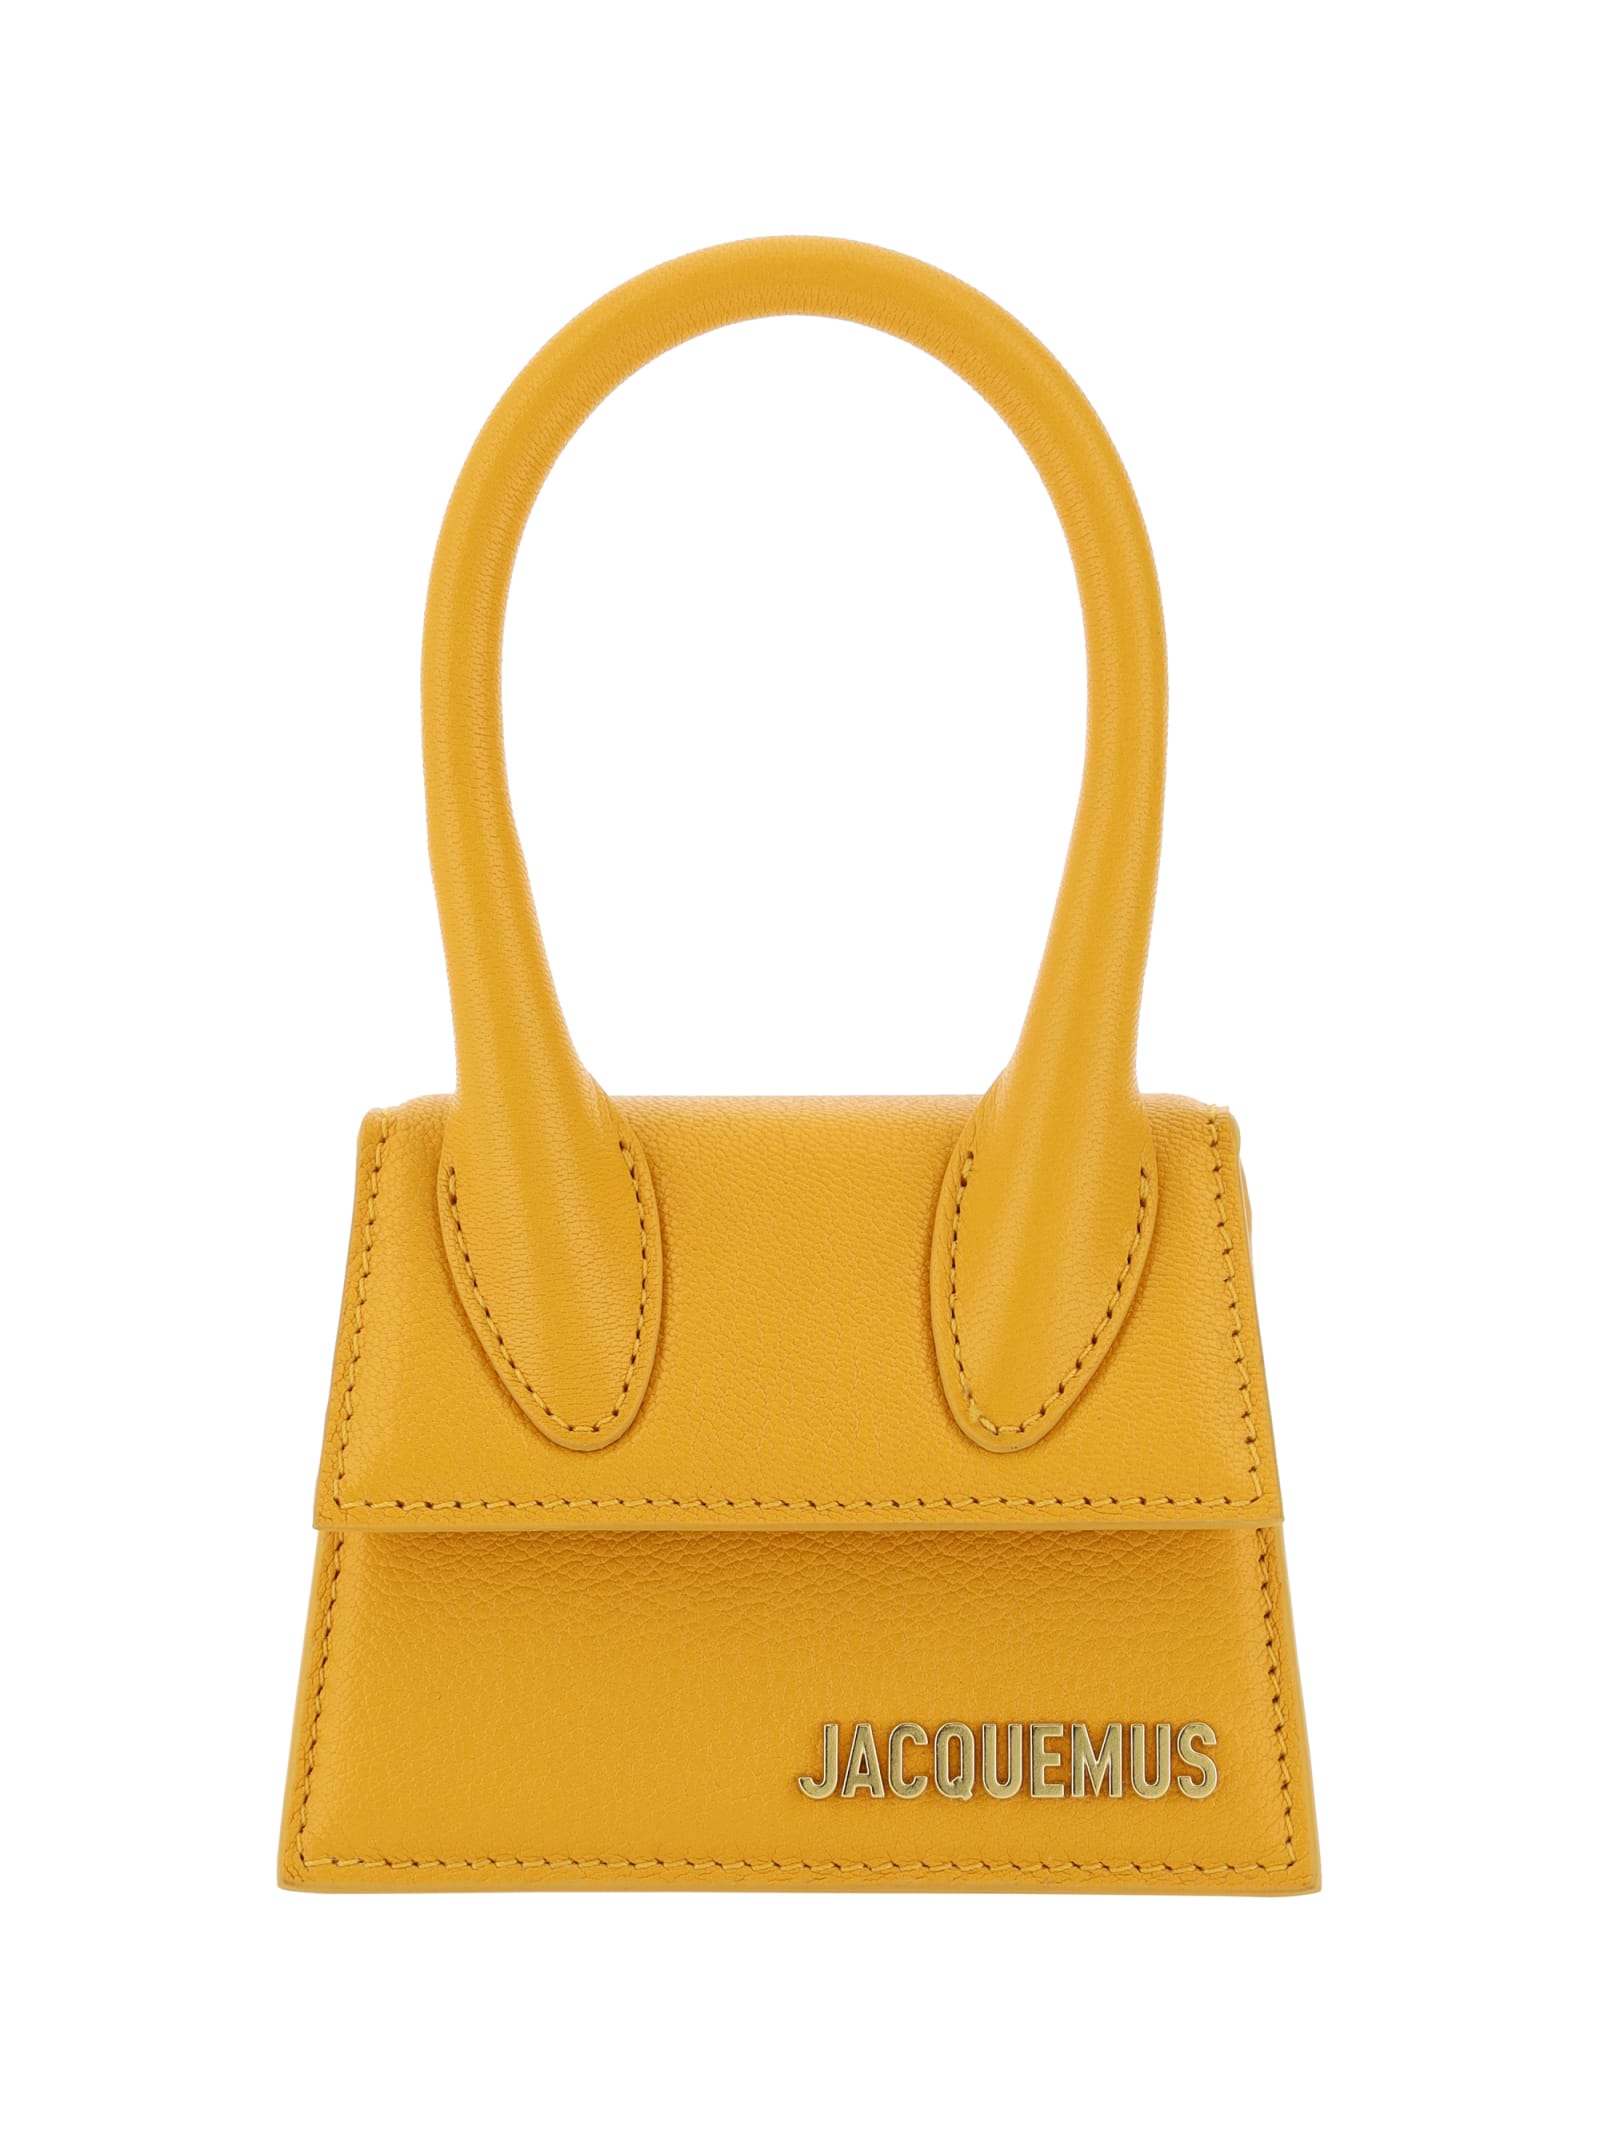 Jacquemus Le Chiquito Handbag